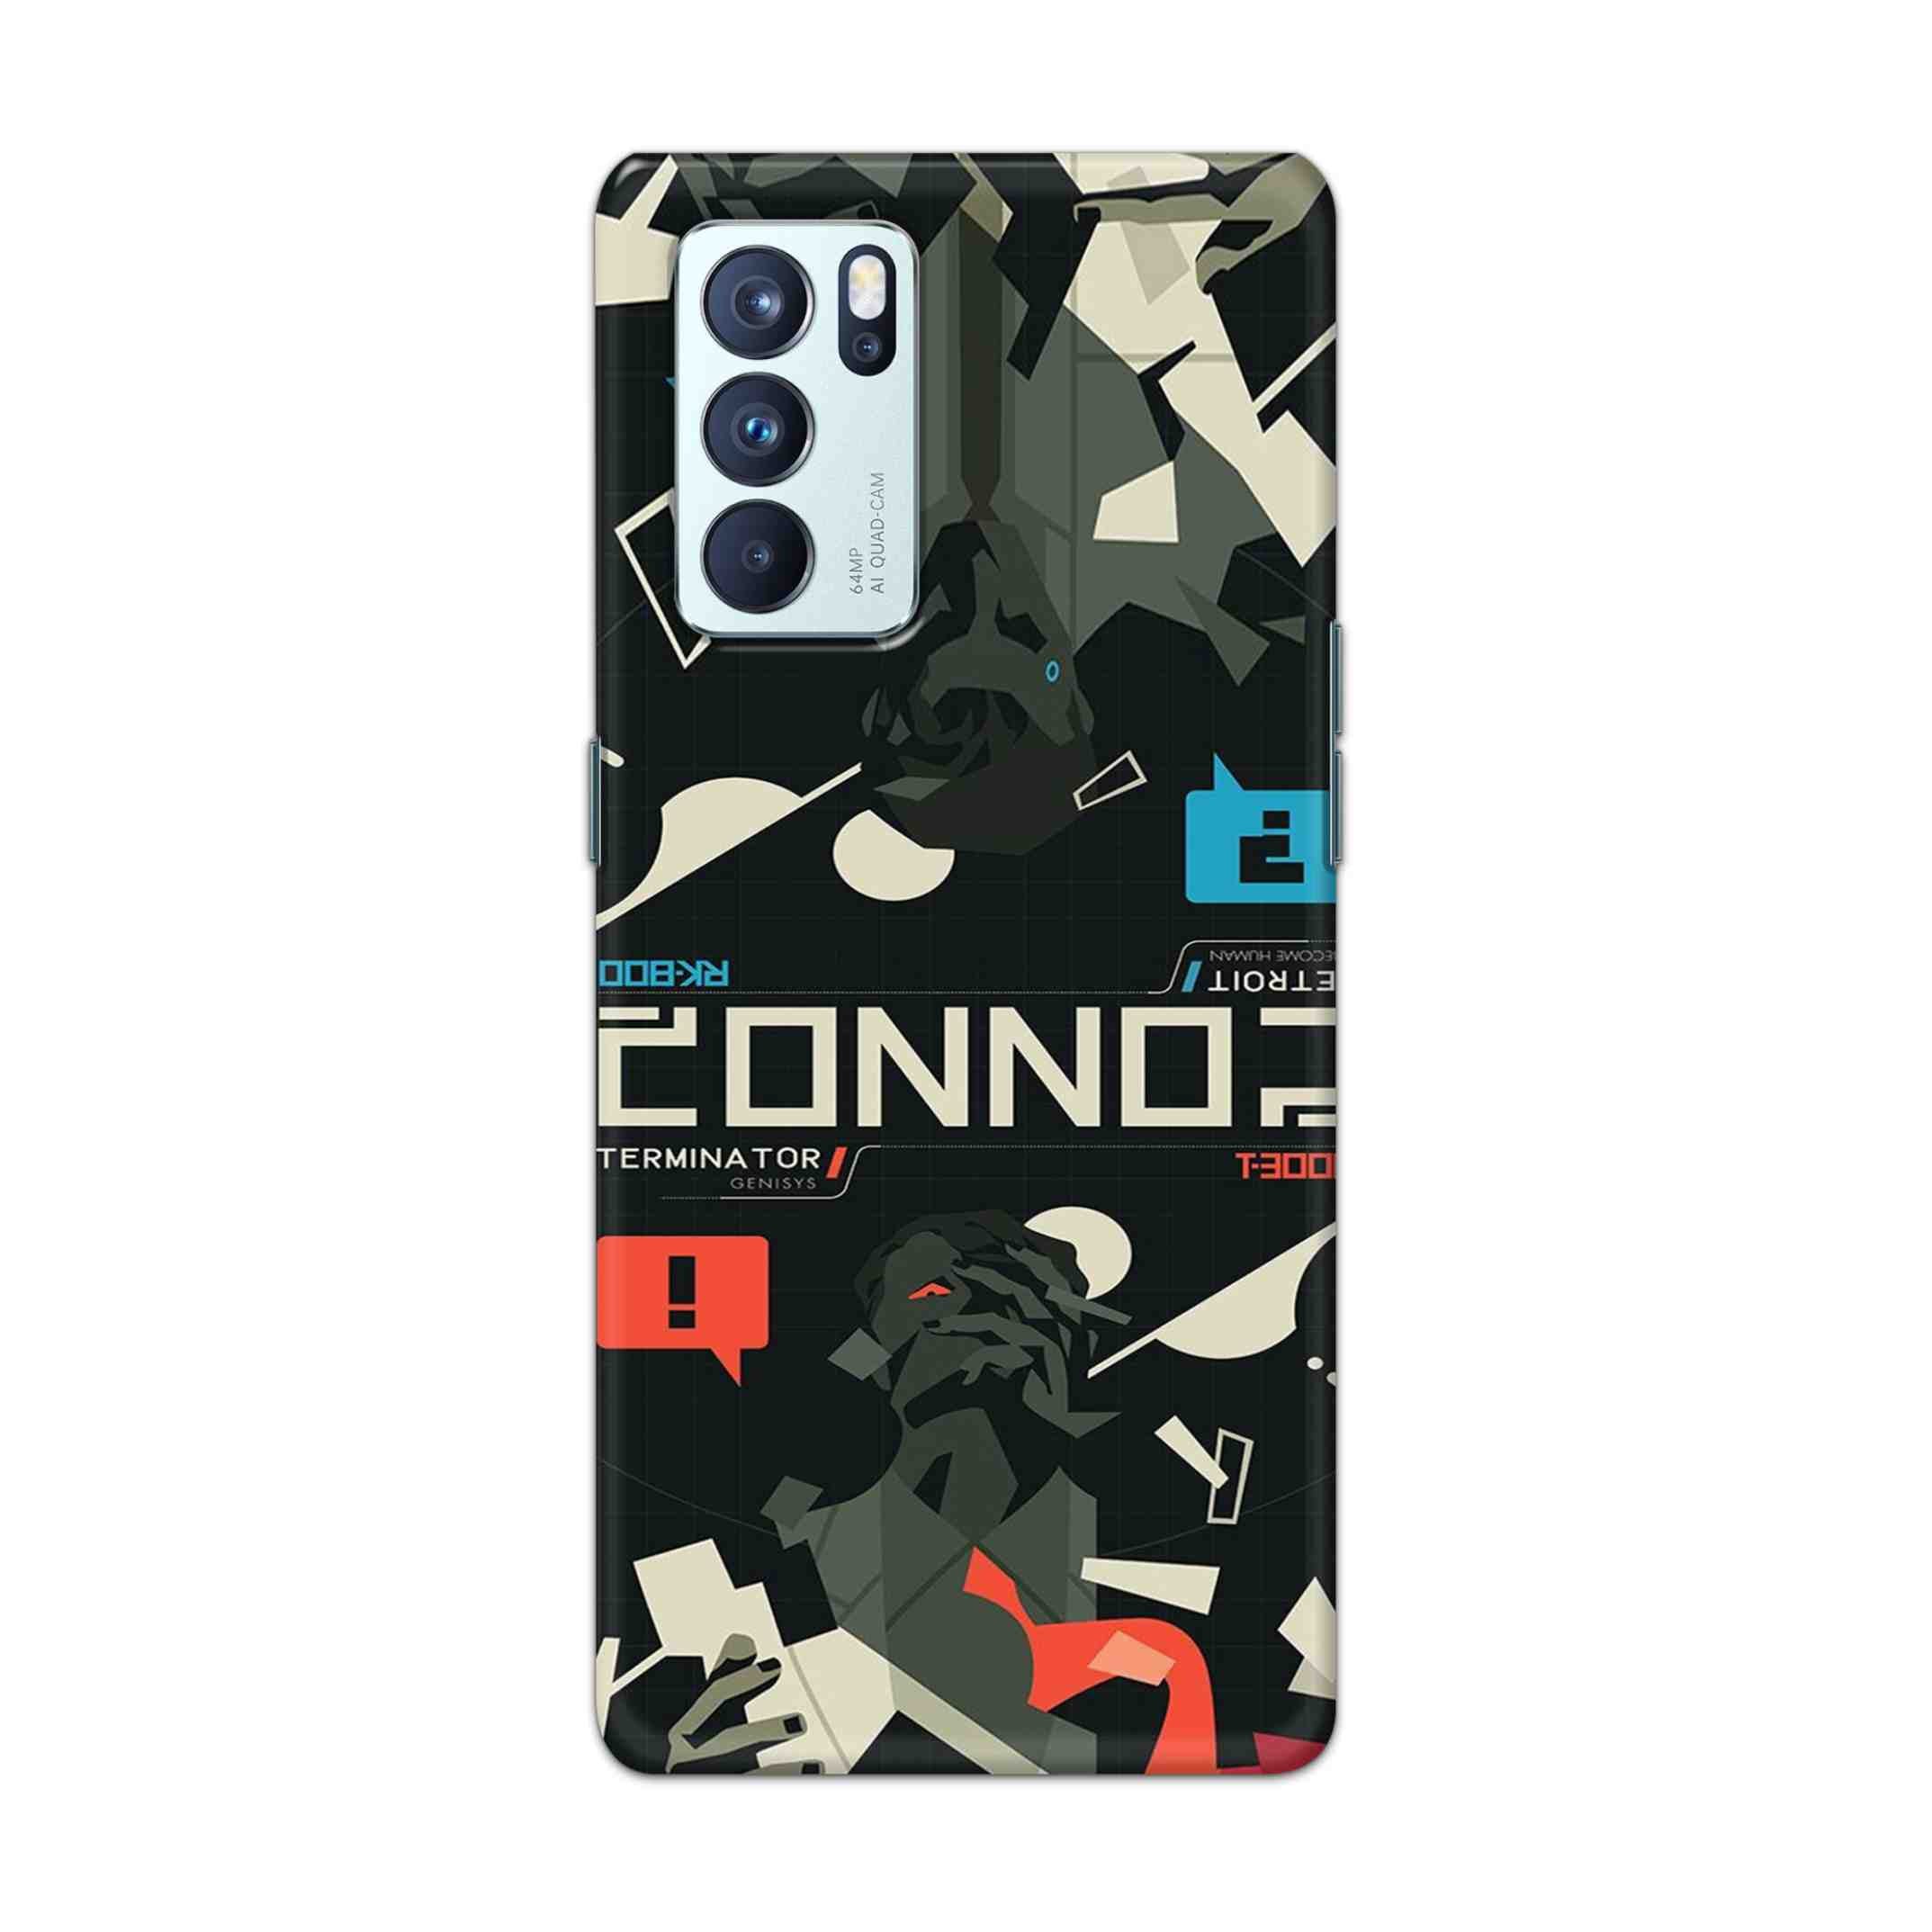 Buy Terminator Hard Back Mobile Phone Case Cover For OPPO Reno 6 Pro 5G Online